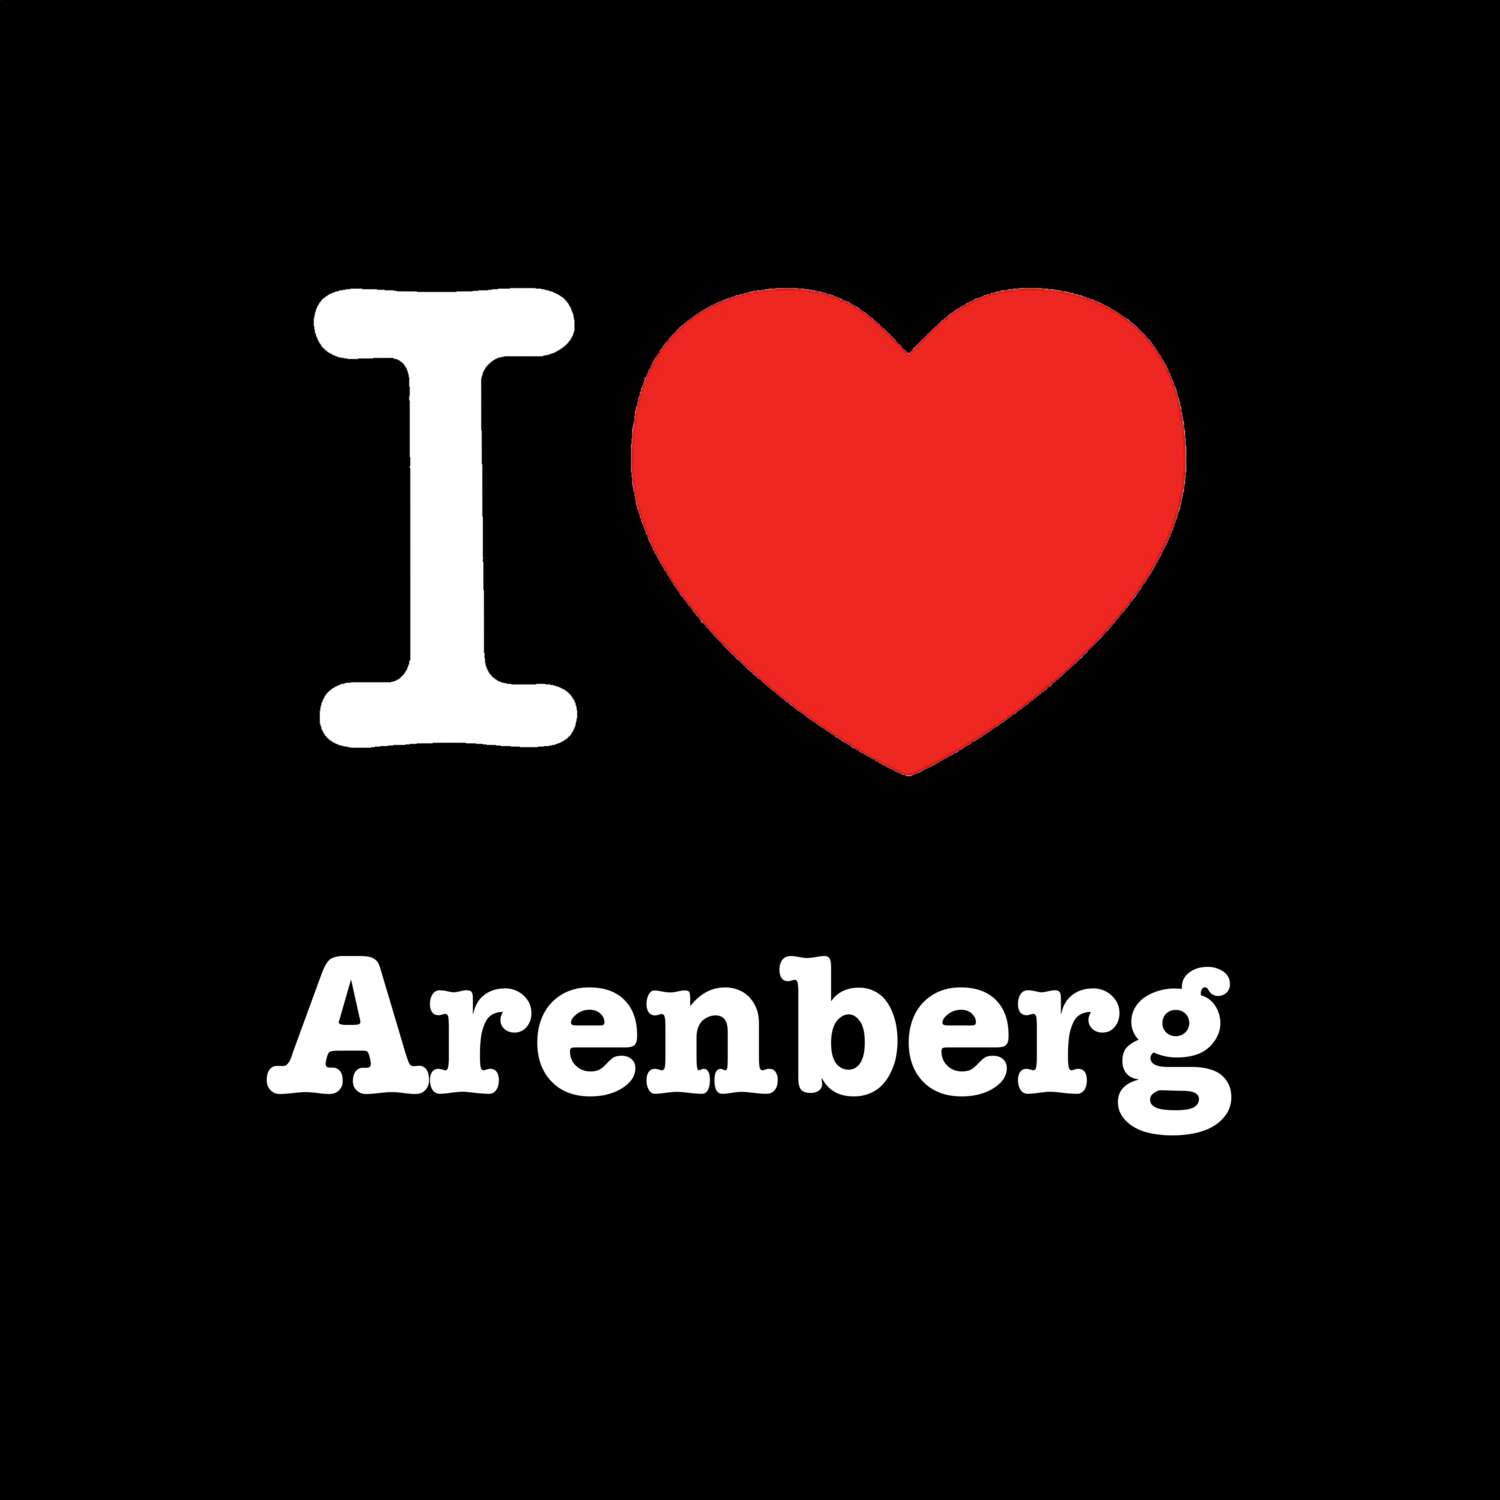 Arenberg T-Shirt »I love«